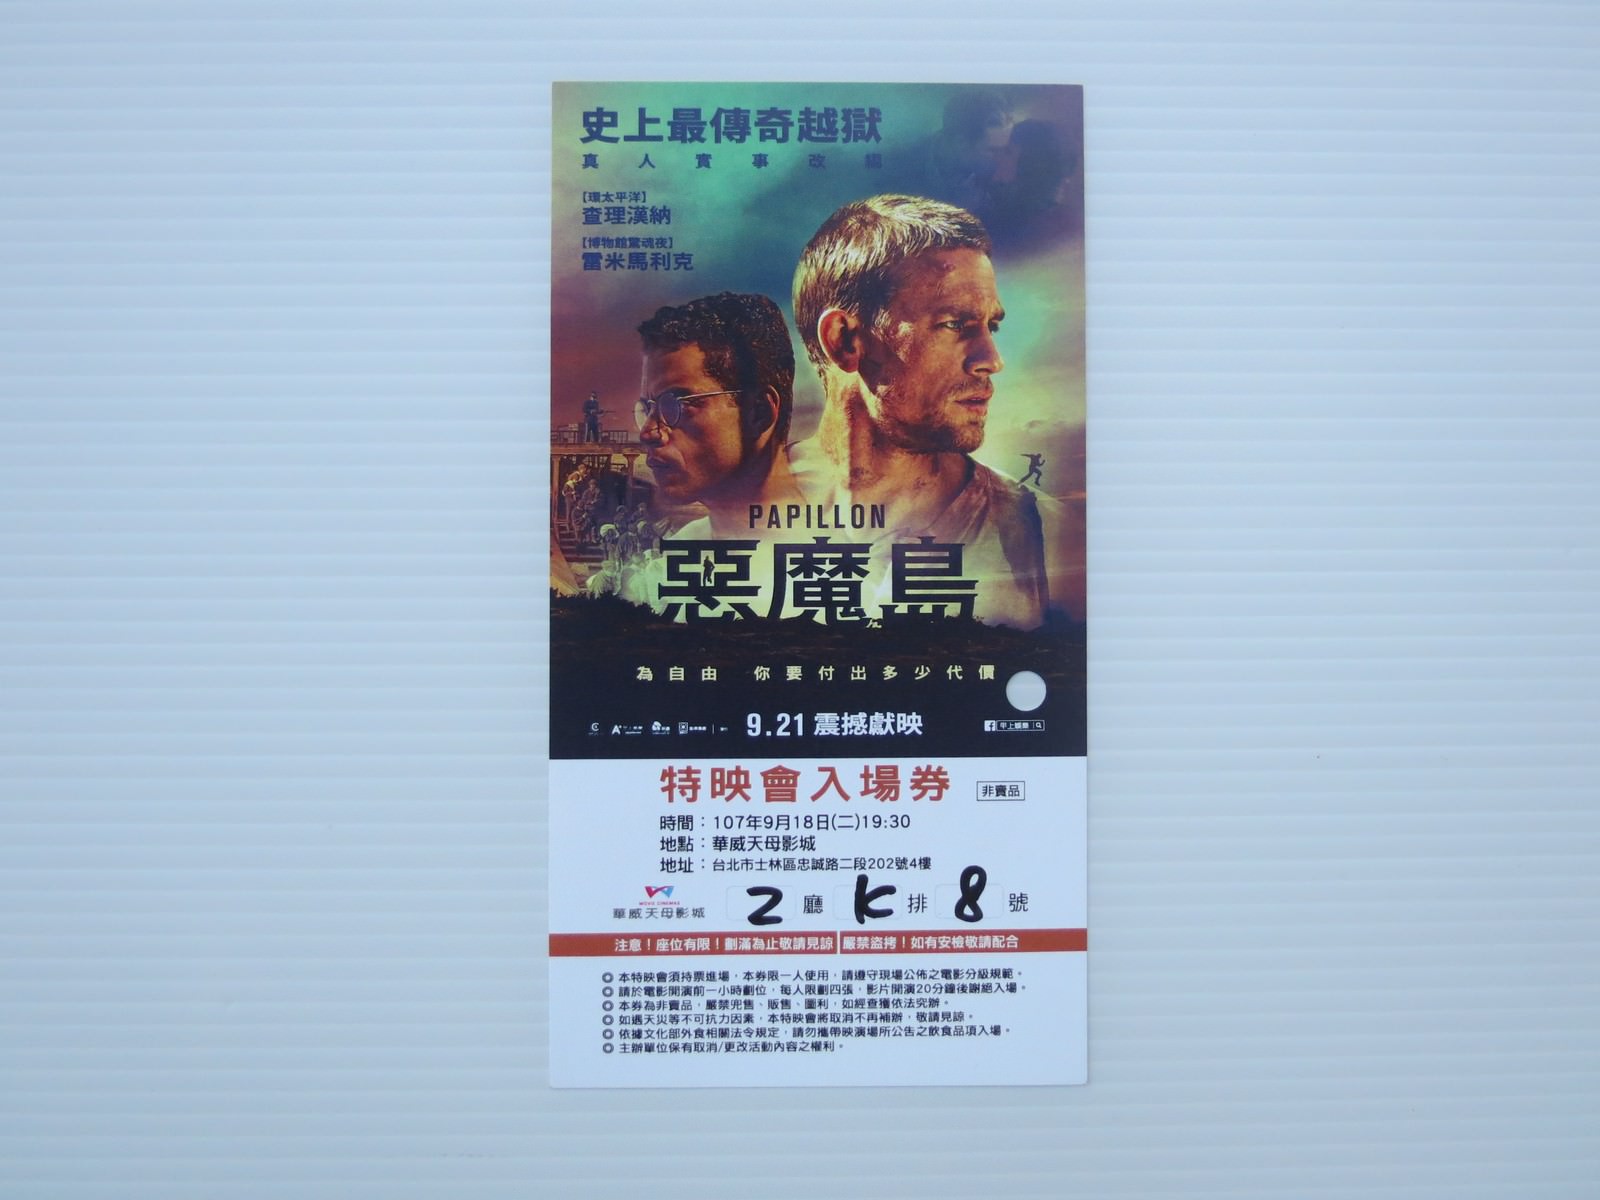 Movie, Papillon(美國, 2017) / 惡魔島(台灣) / 巴比龙(網路), 特映會電影票